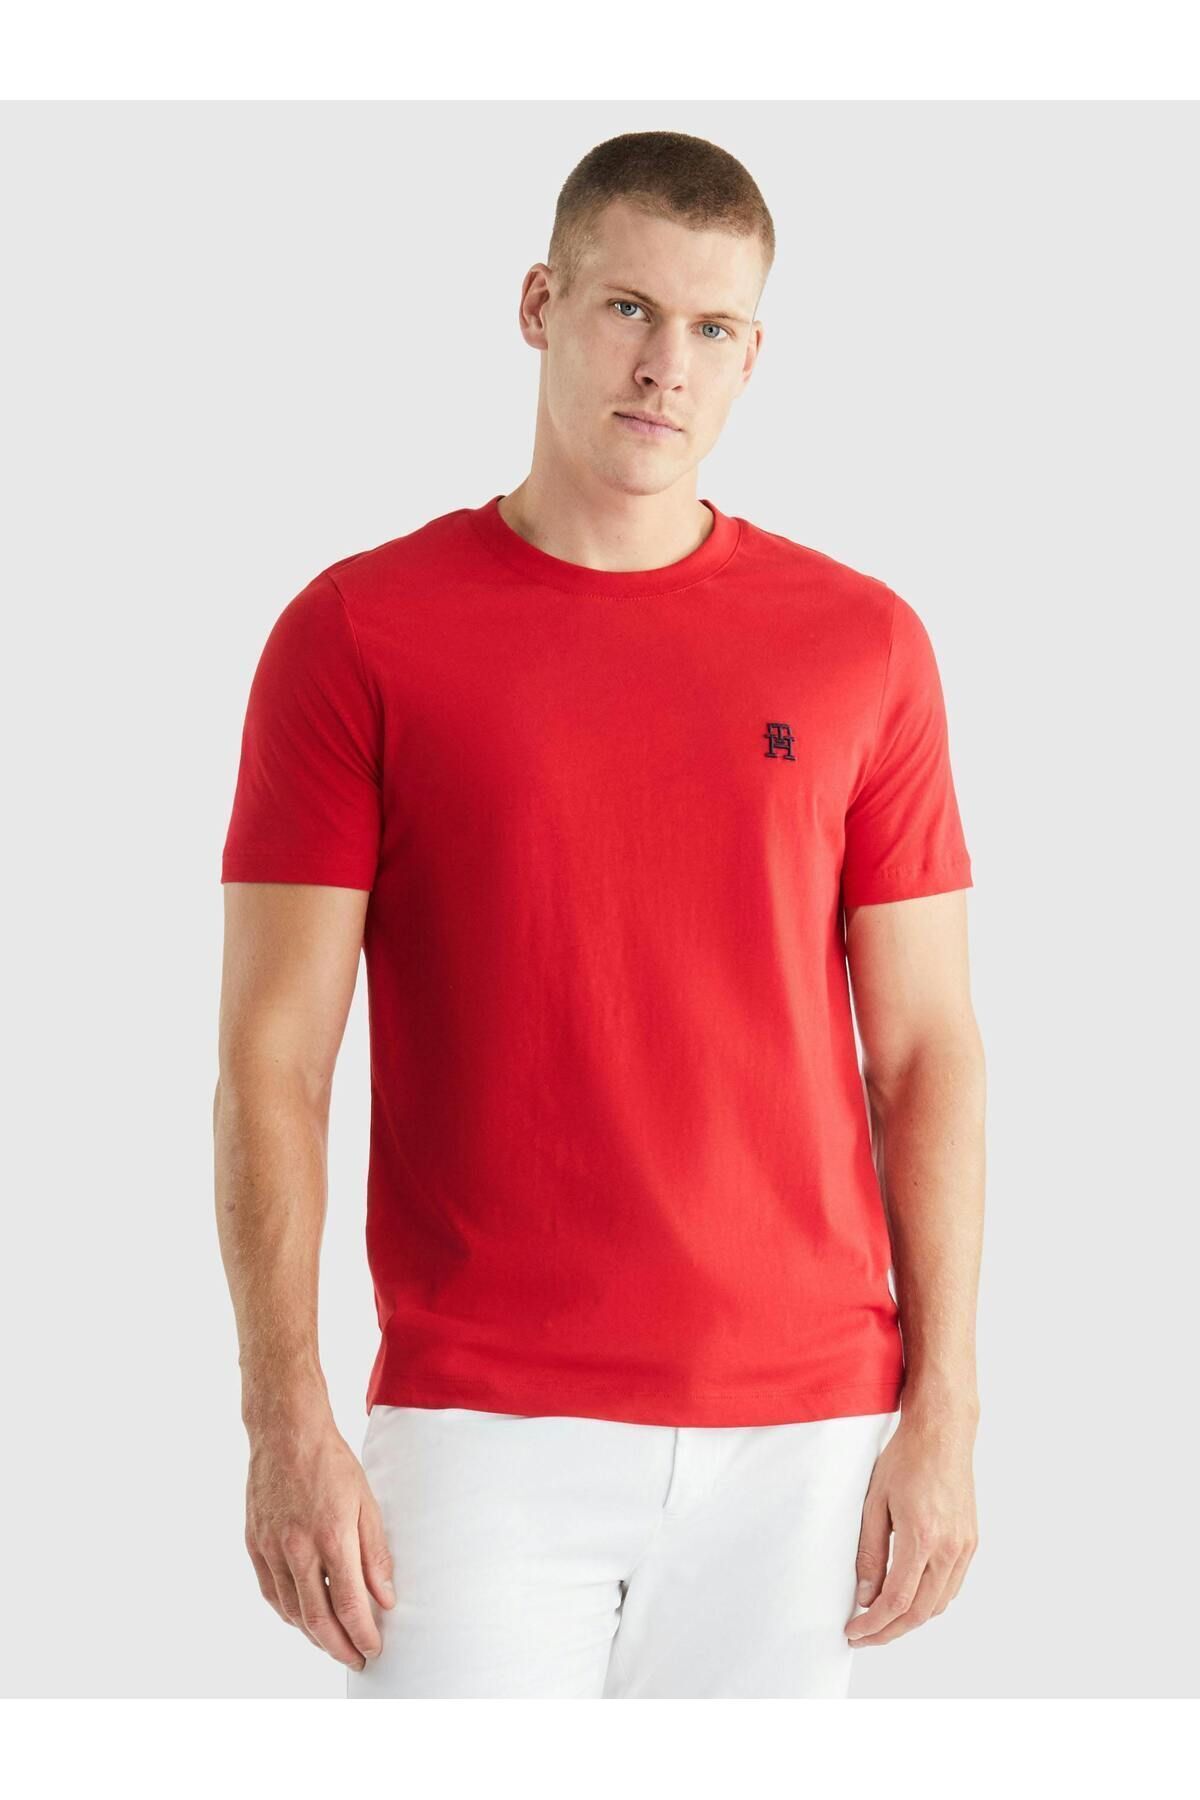 Tommy Hilfiger Erkek Dokuma Kumaş Kısa Kol Düz Model Kırmızı T-Shirt MW0MW33987-XLG